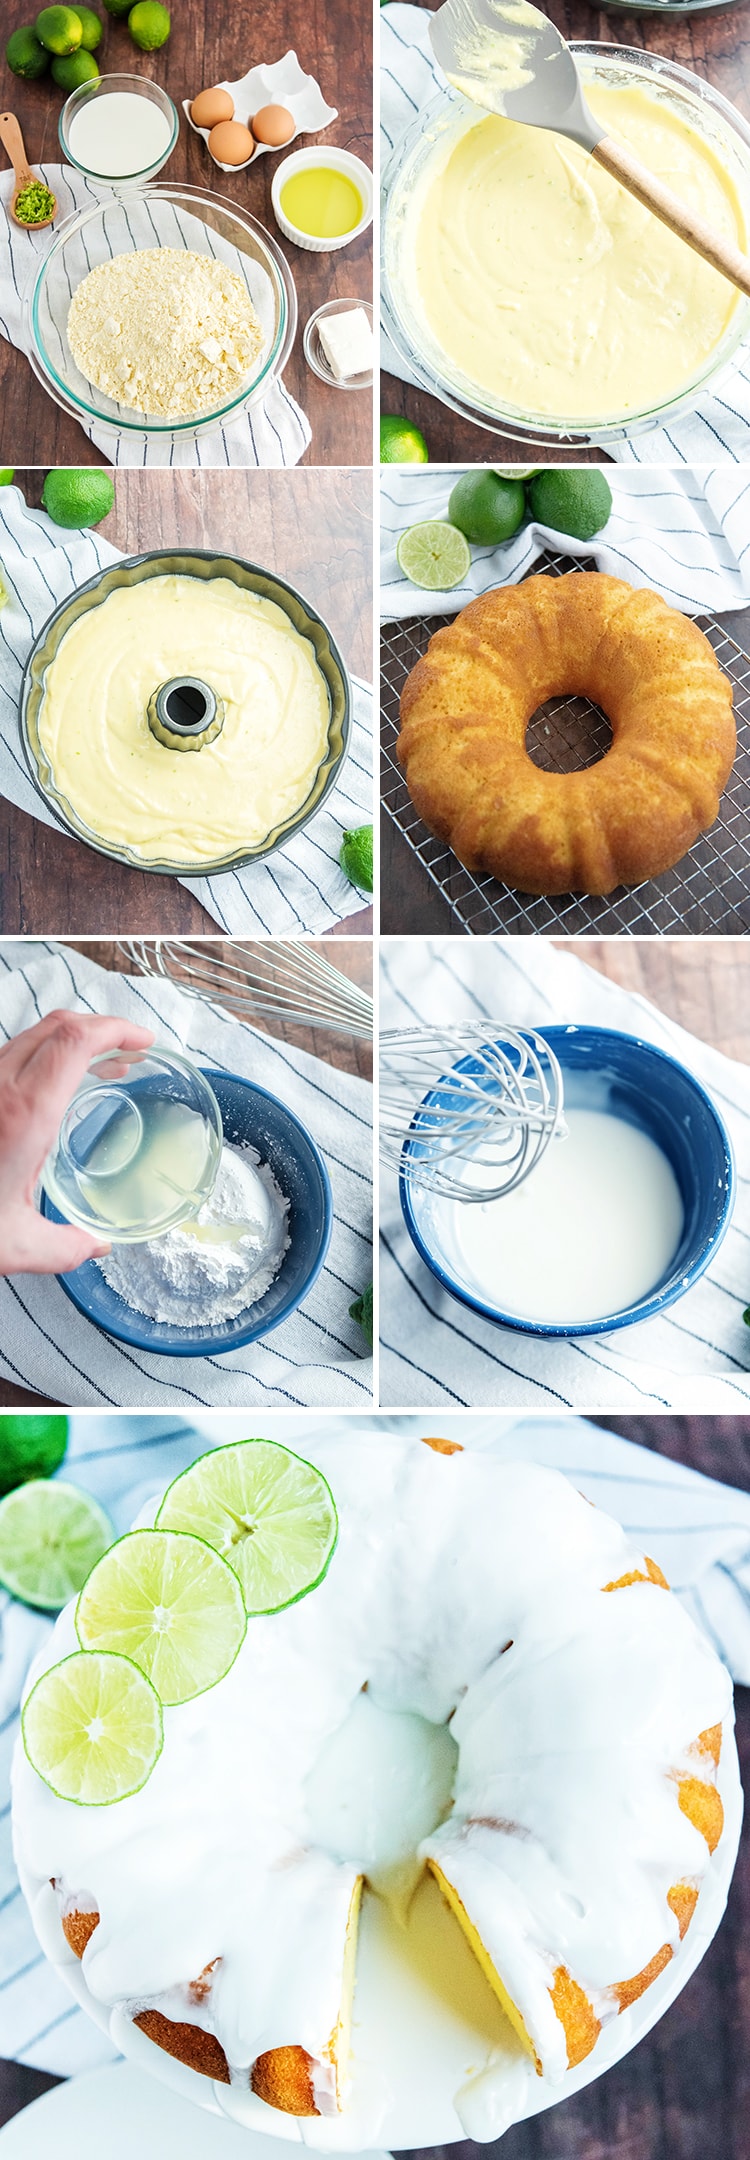 How to make Lime Bundt Cake